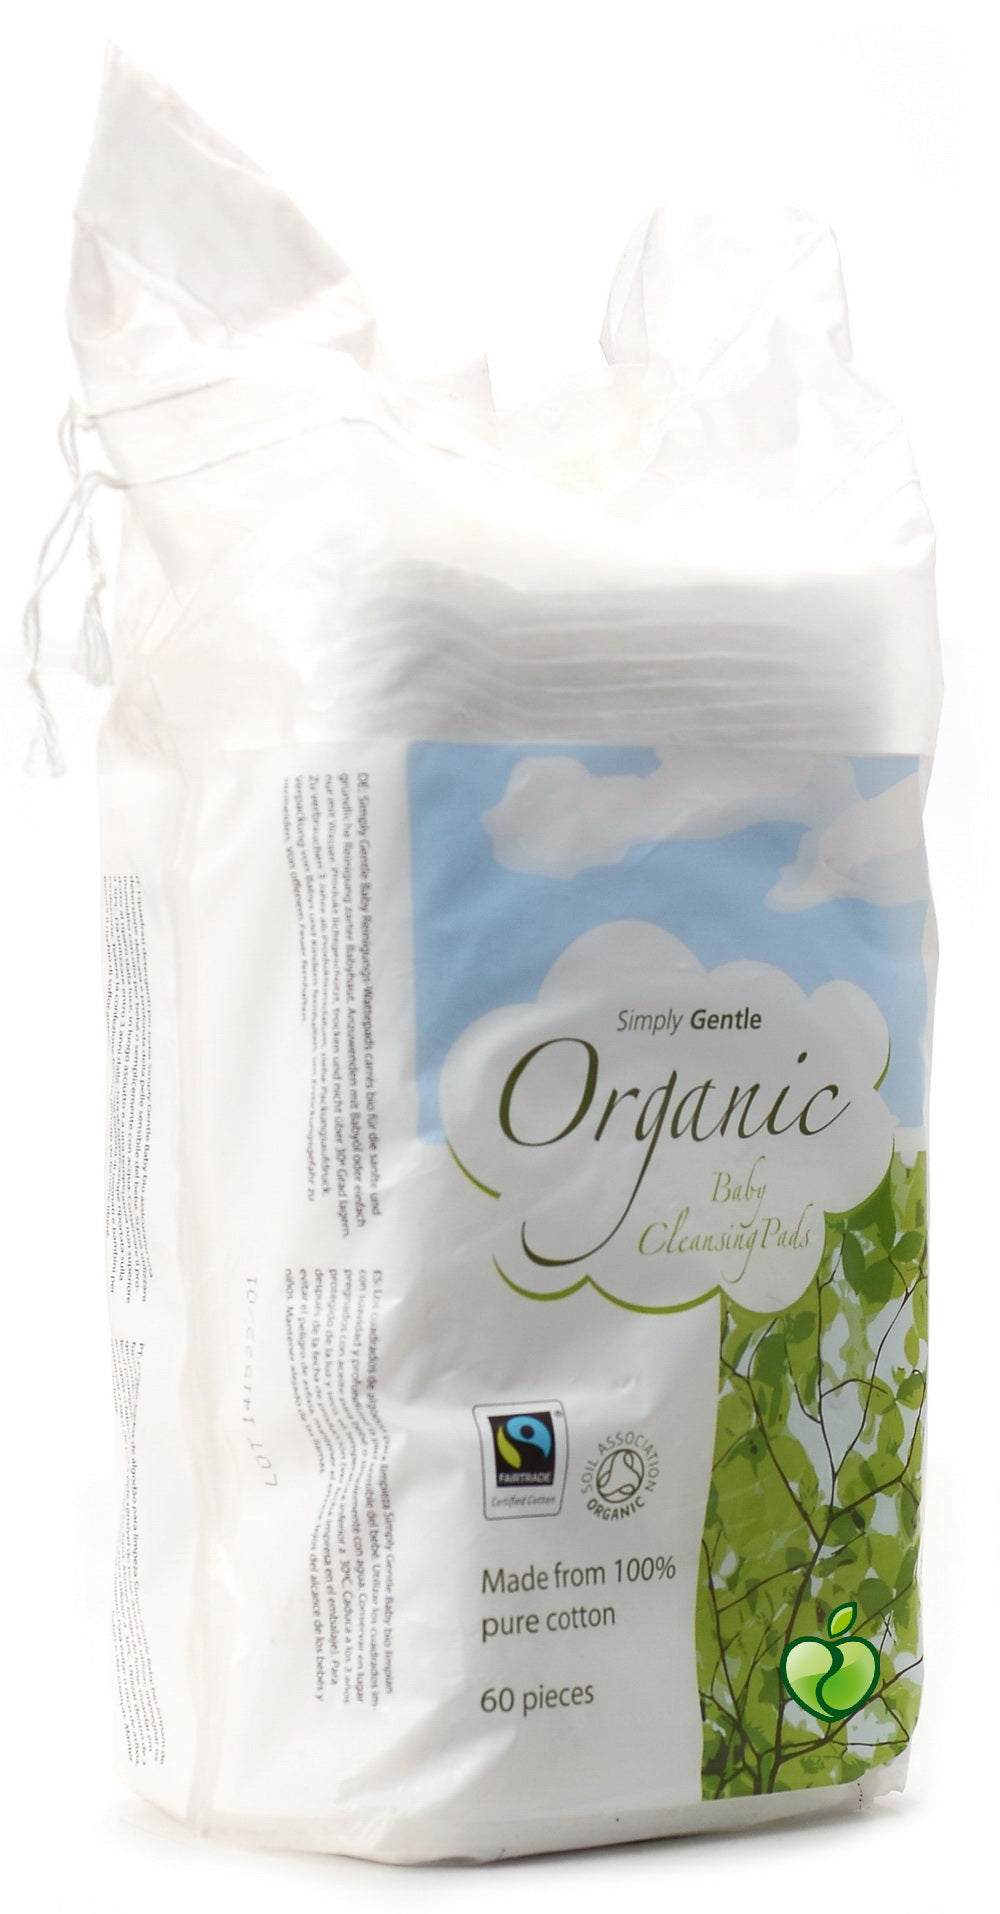 Simply Gentle Organic Fairtrade Cotton Baby Rectangular (60 Pads)